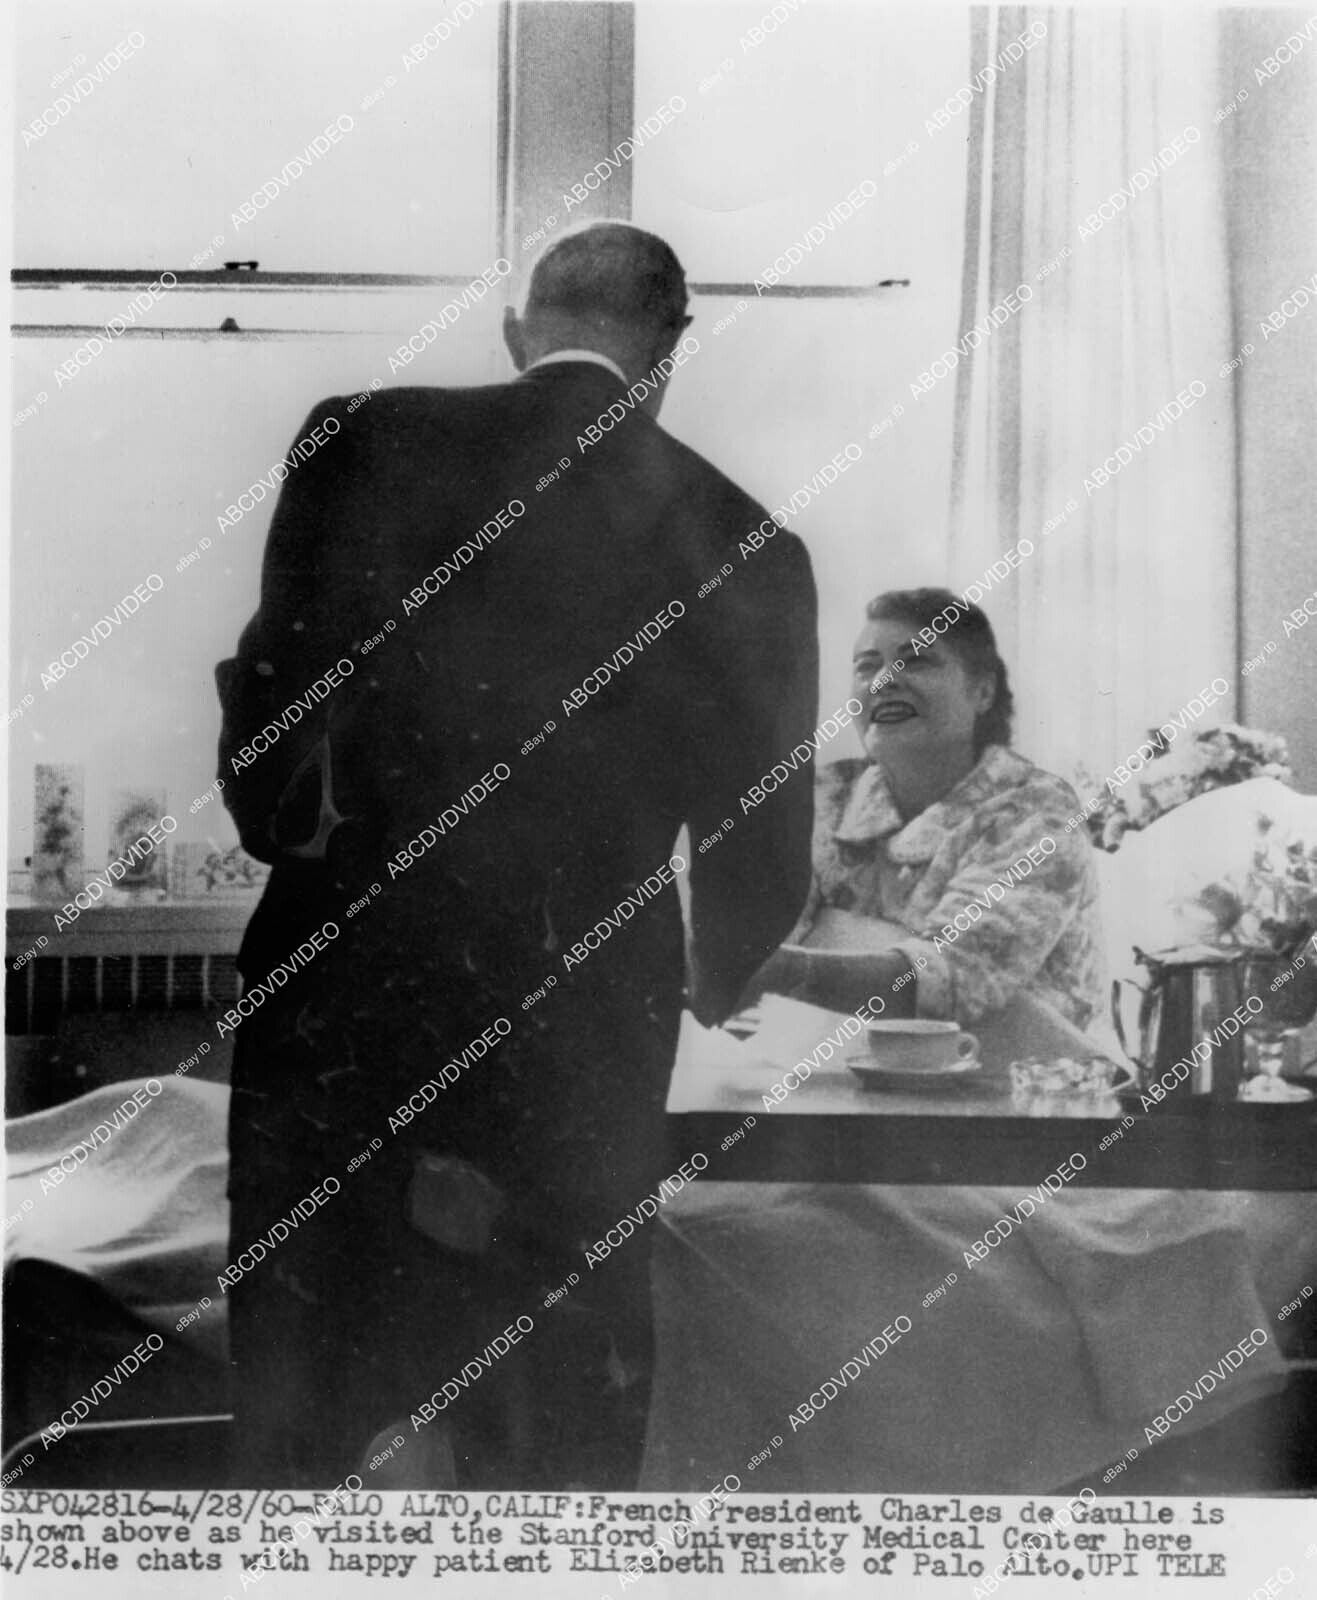 crp-67688 1960 politics French President Charles de Gaulle visits Elizabeth Rien